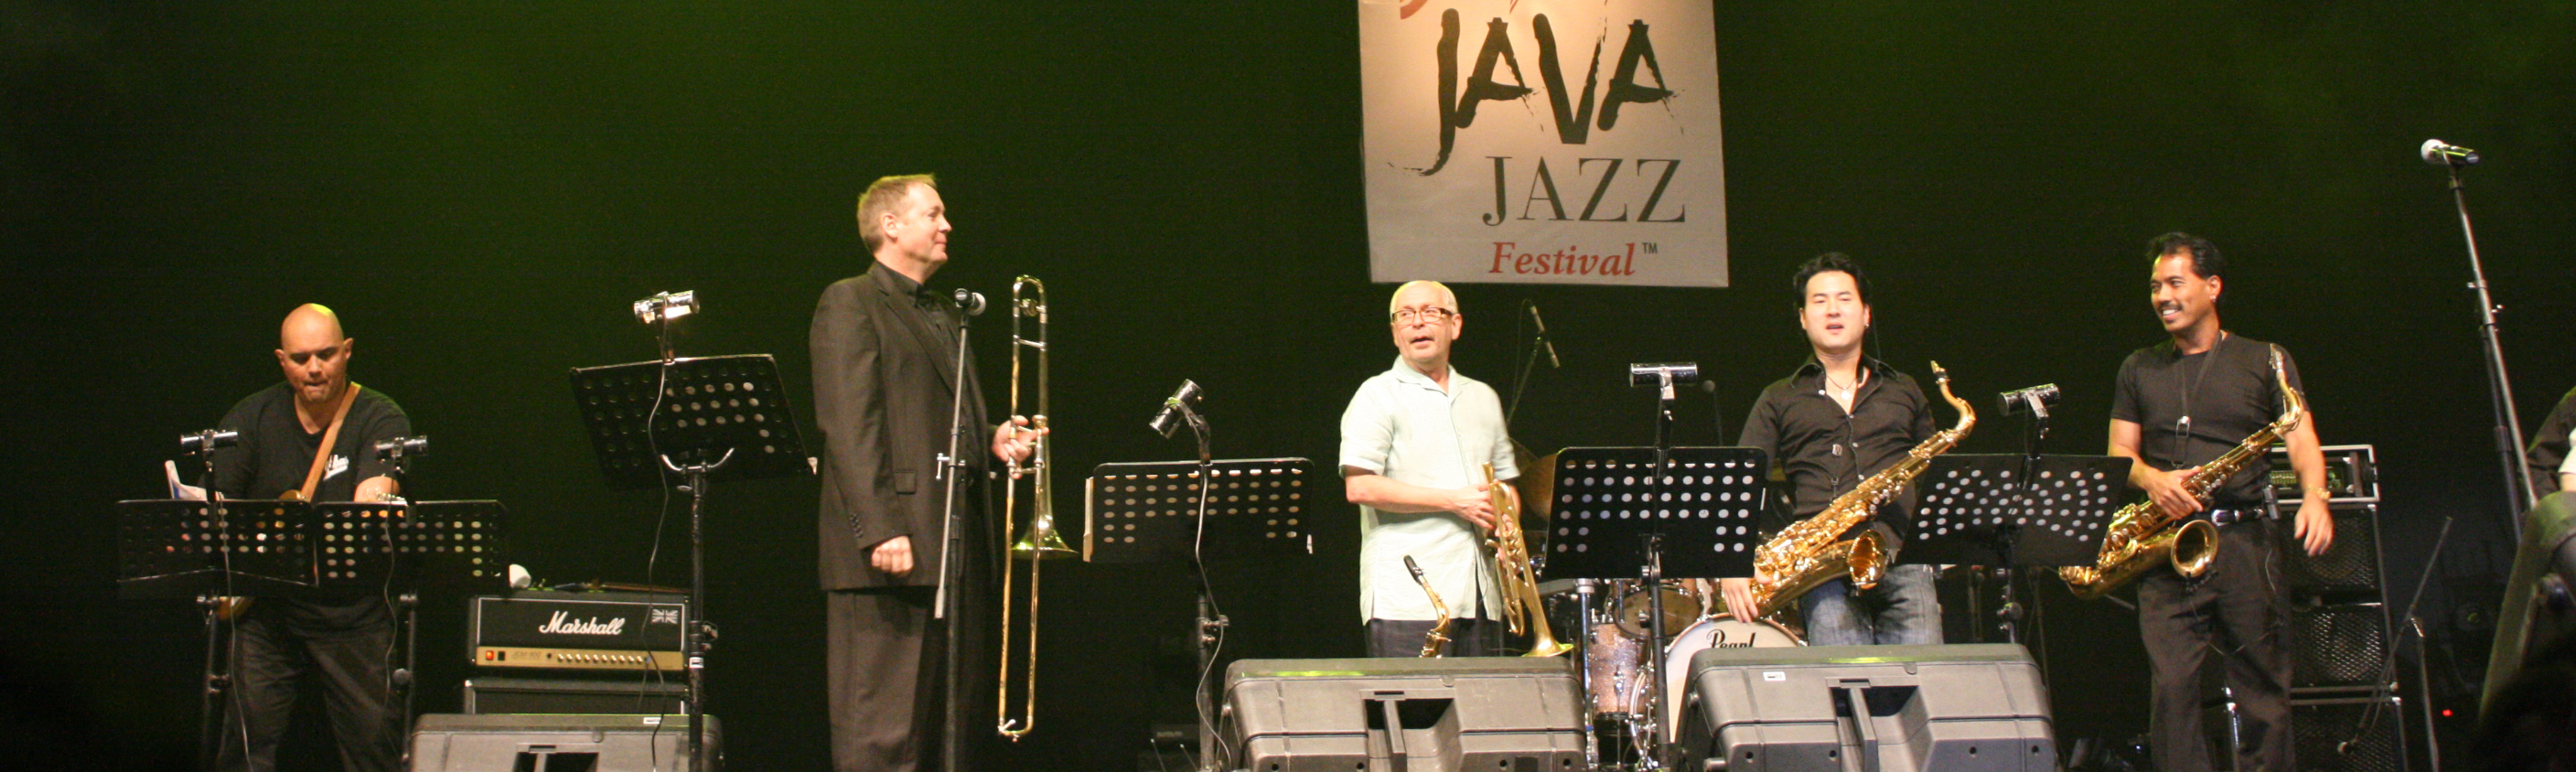 Java Jazz Festival in Jakarta, Indonesia : Photo Credit; Daniel Giovanni